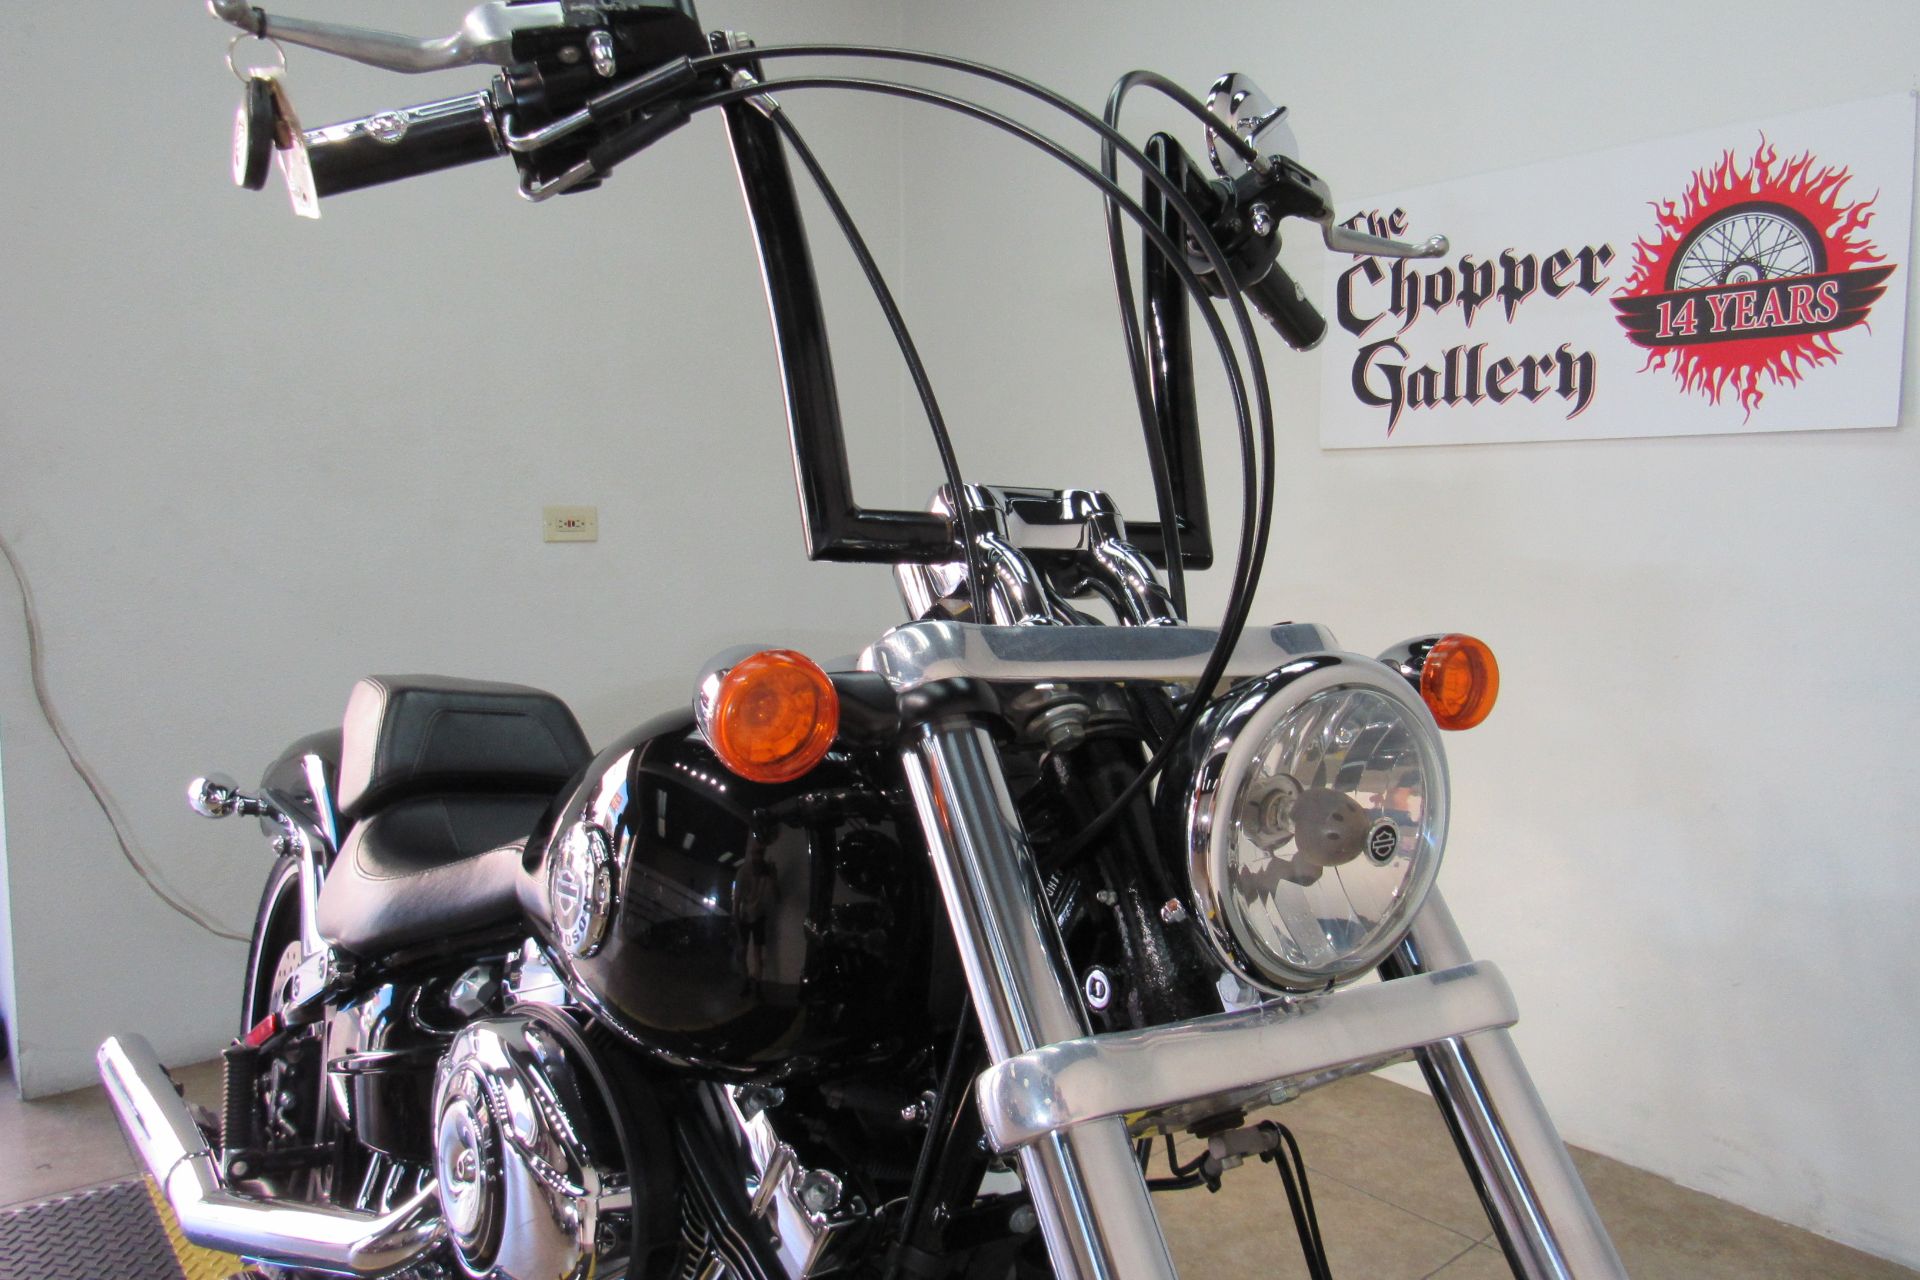 2014 Harley-Davidson Breakout® in Temecula, California - Photo 21